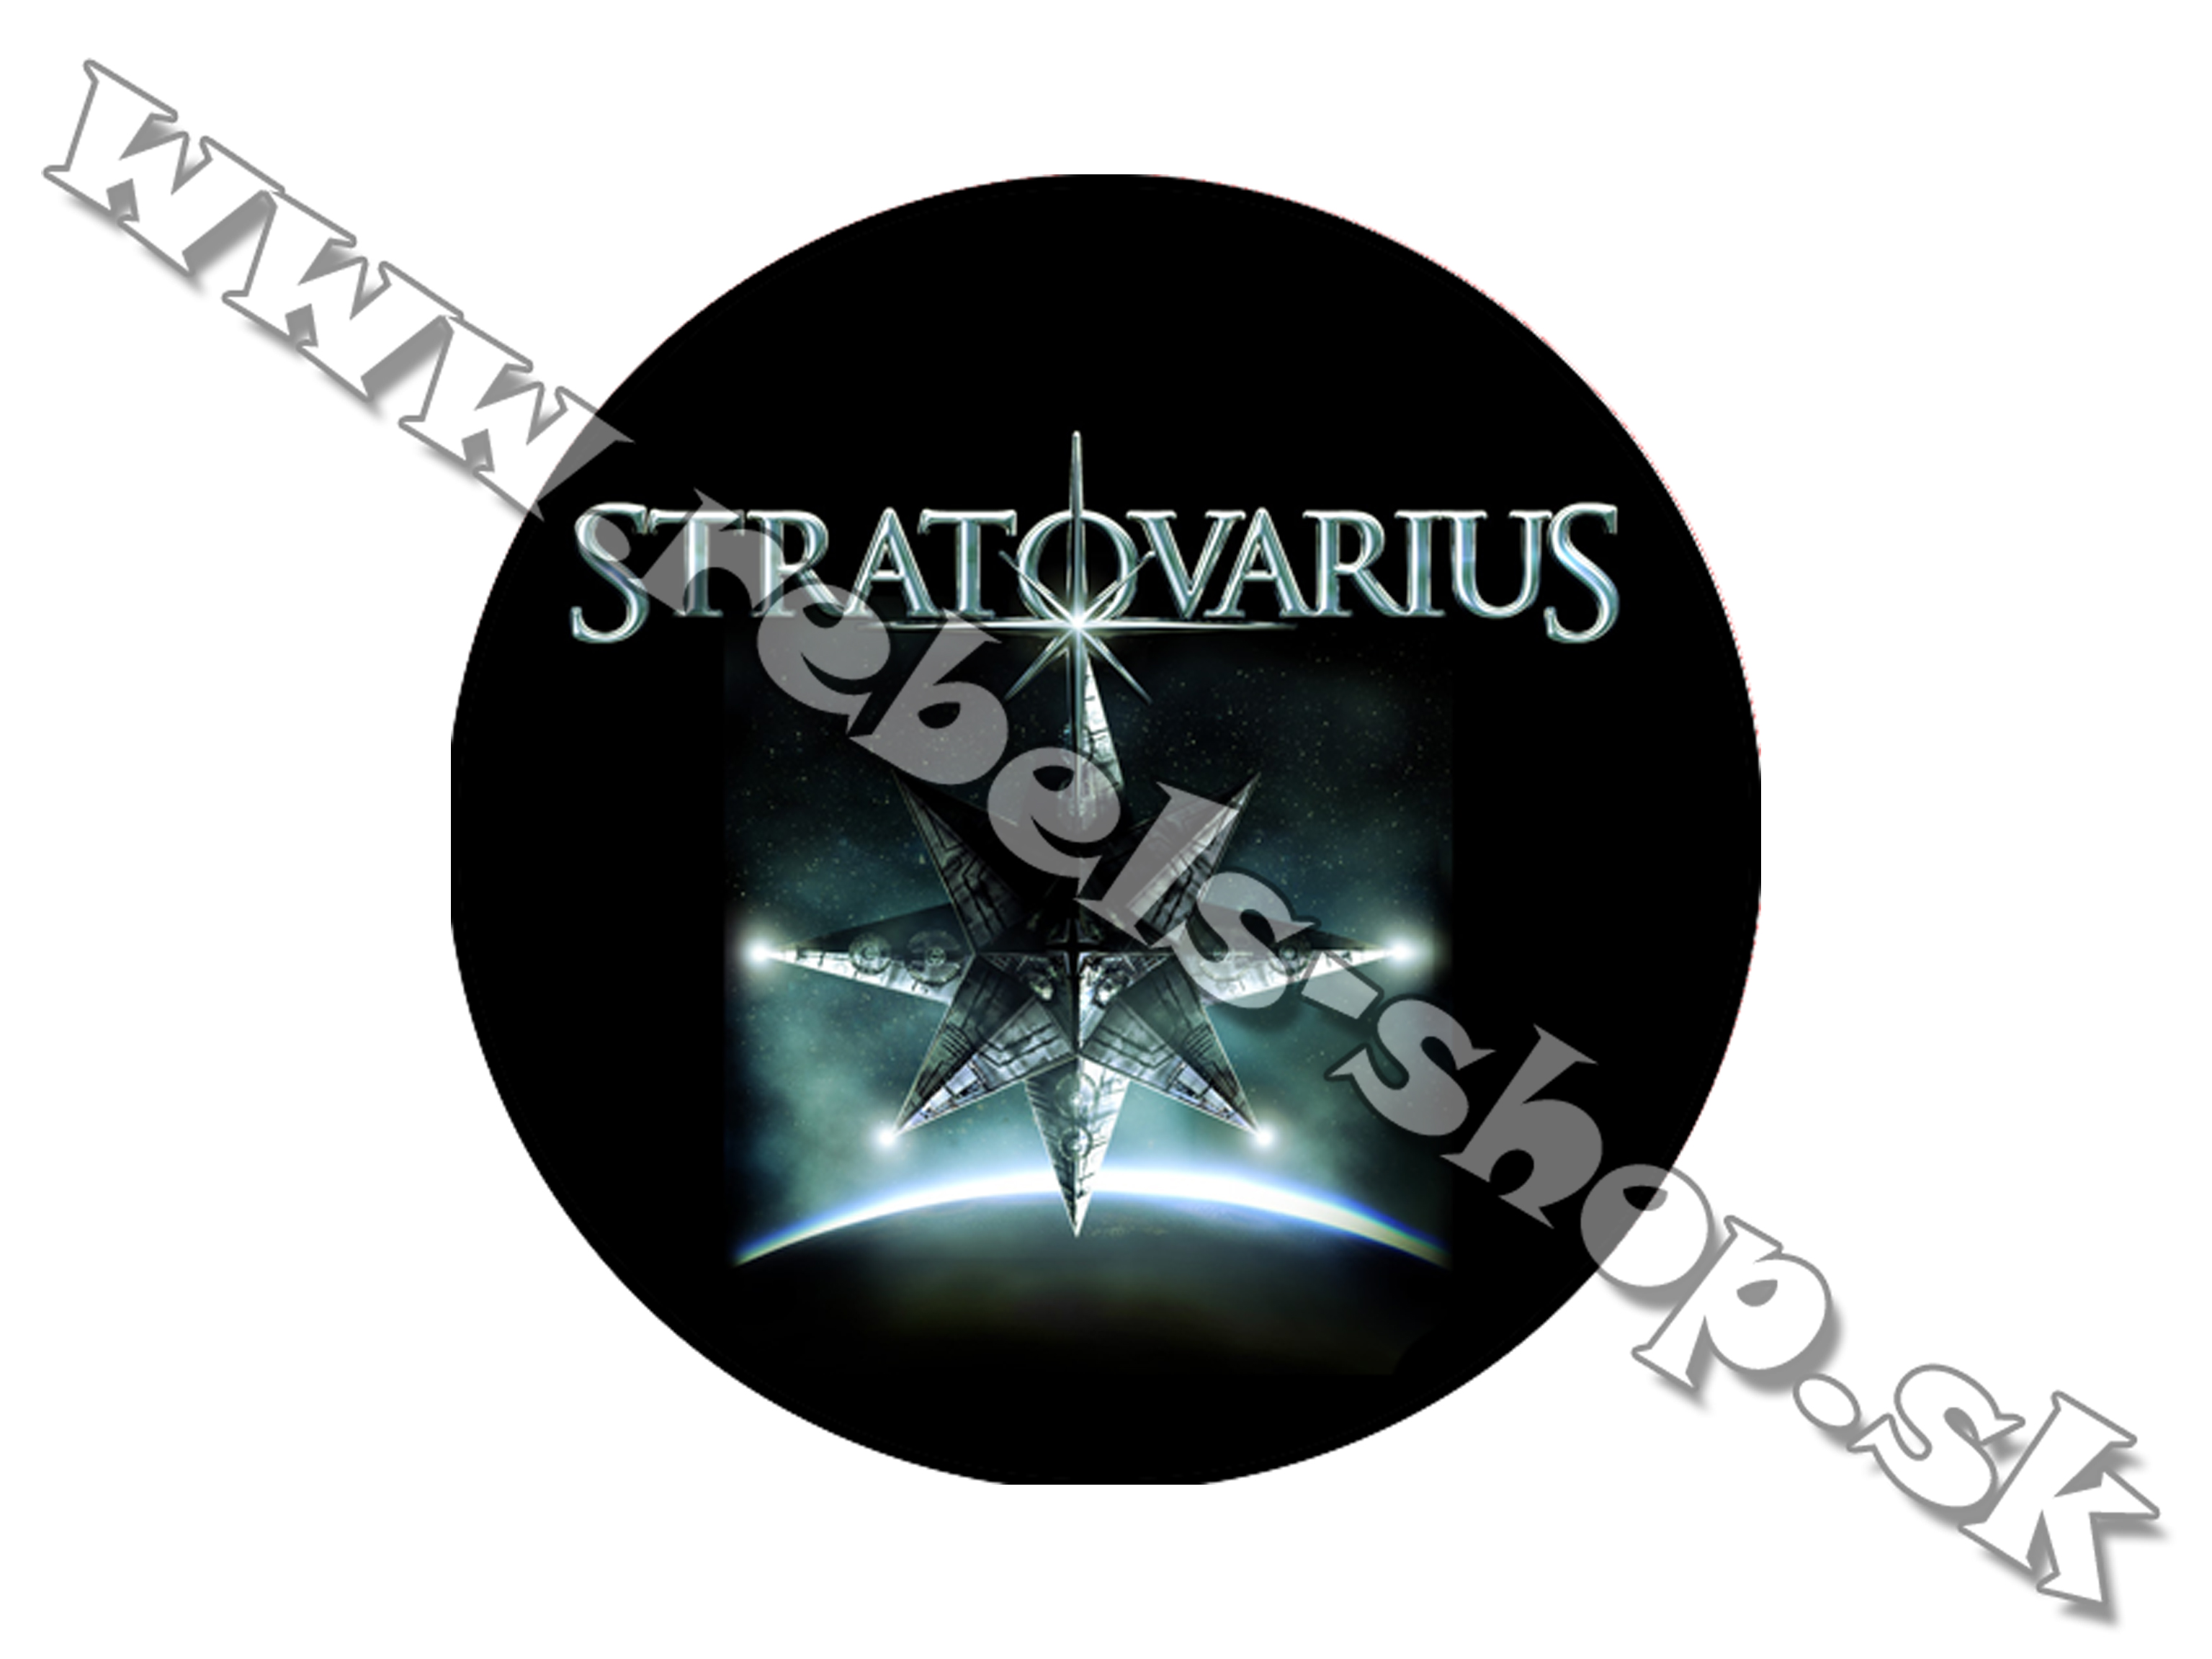 Odznak "Stratovarius"